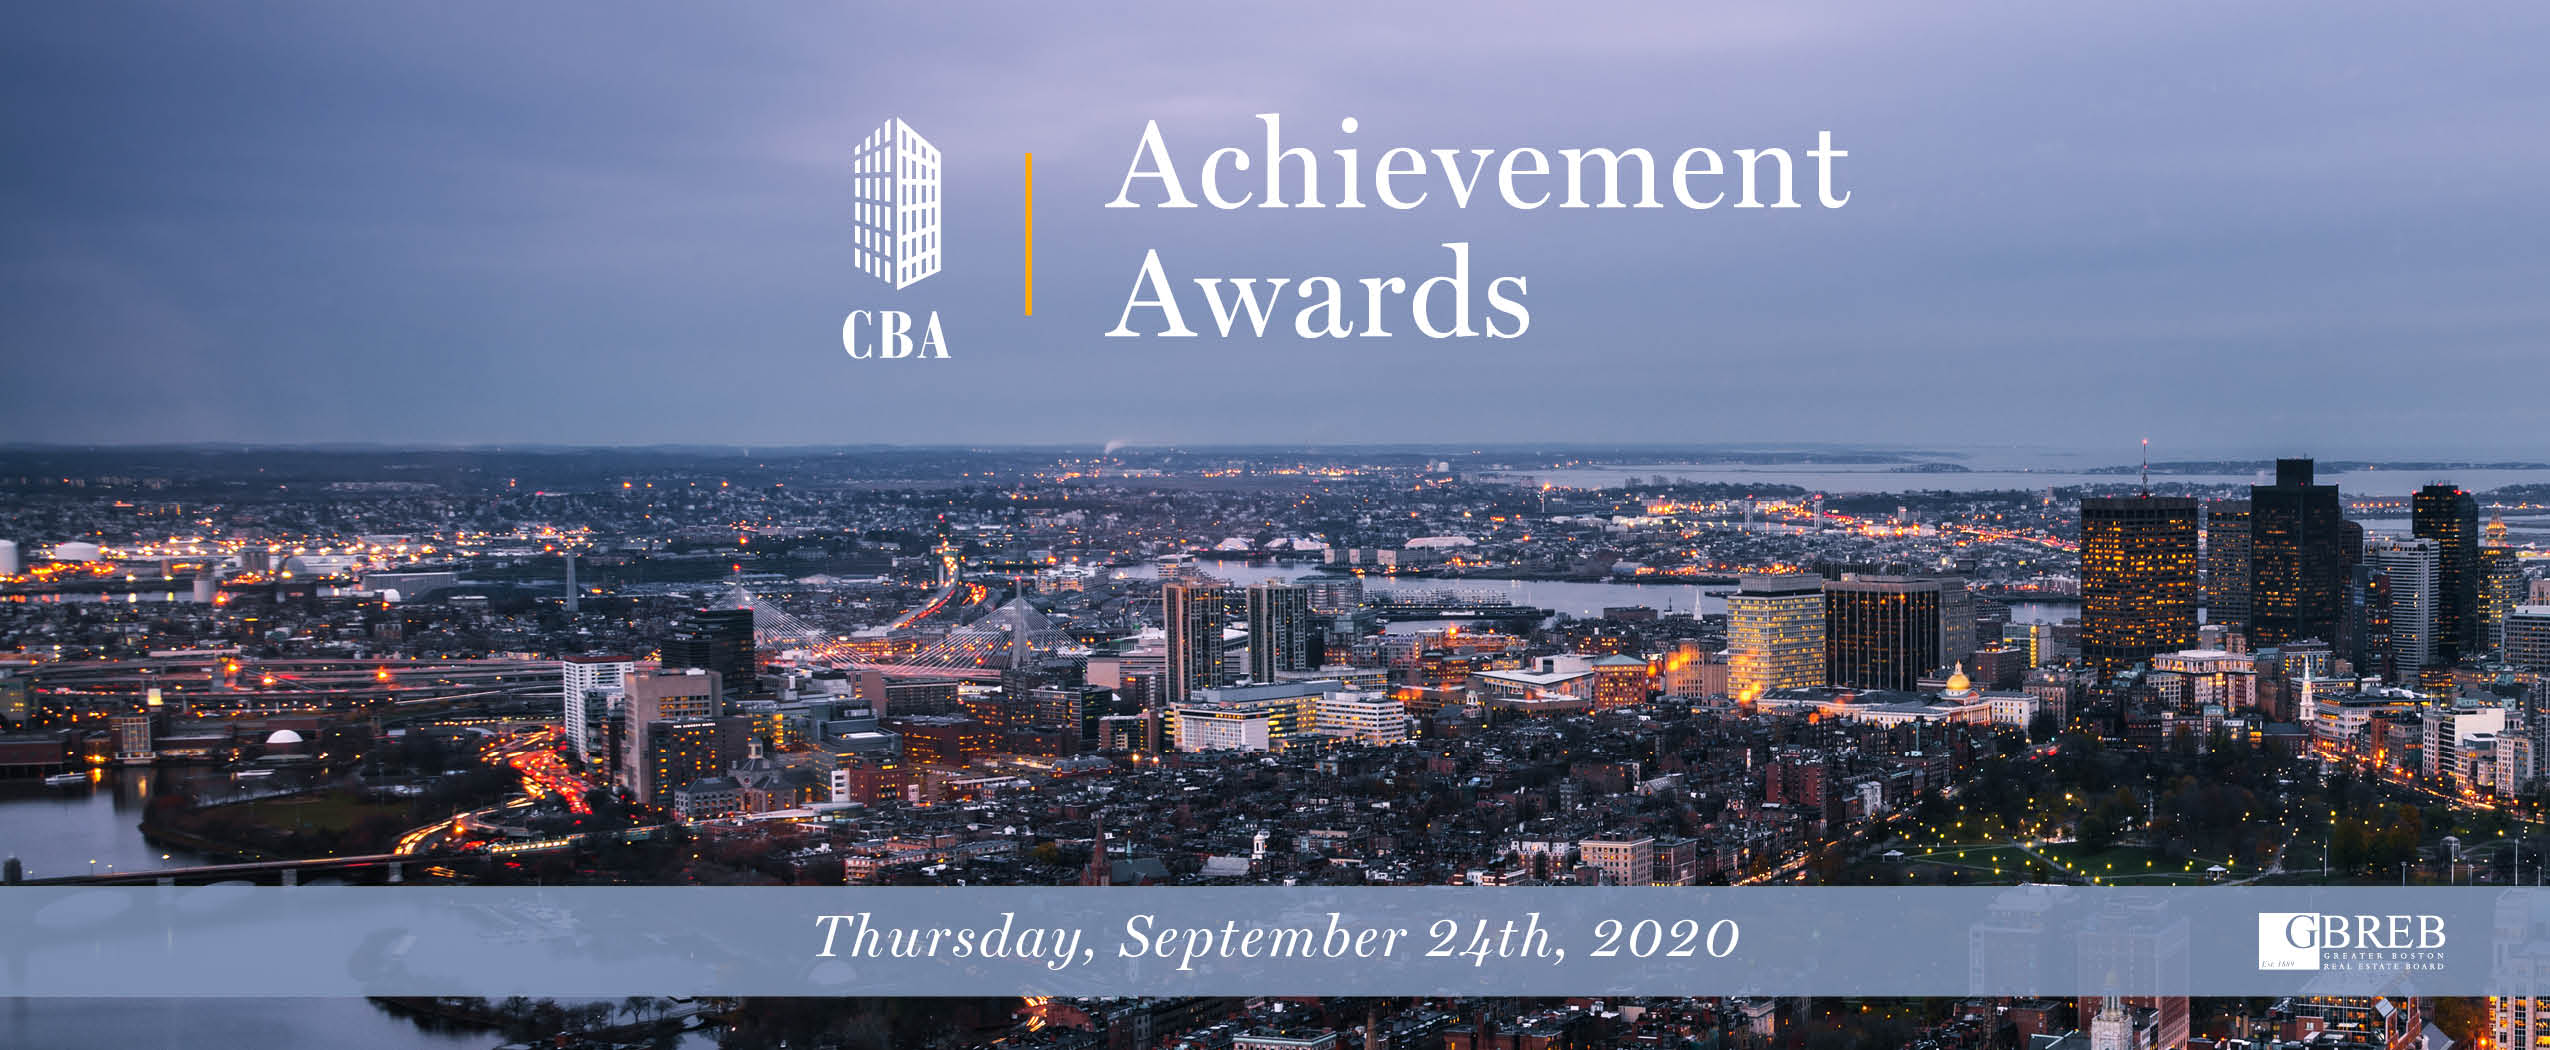 CBA Achievement Awards - NOW SEPTEMBER 24, 2020